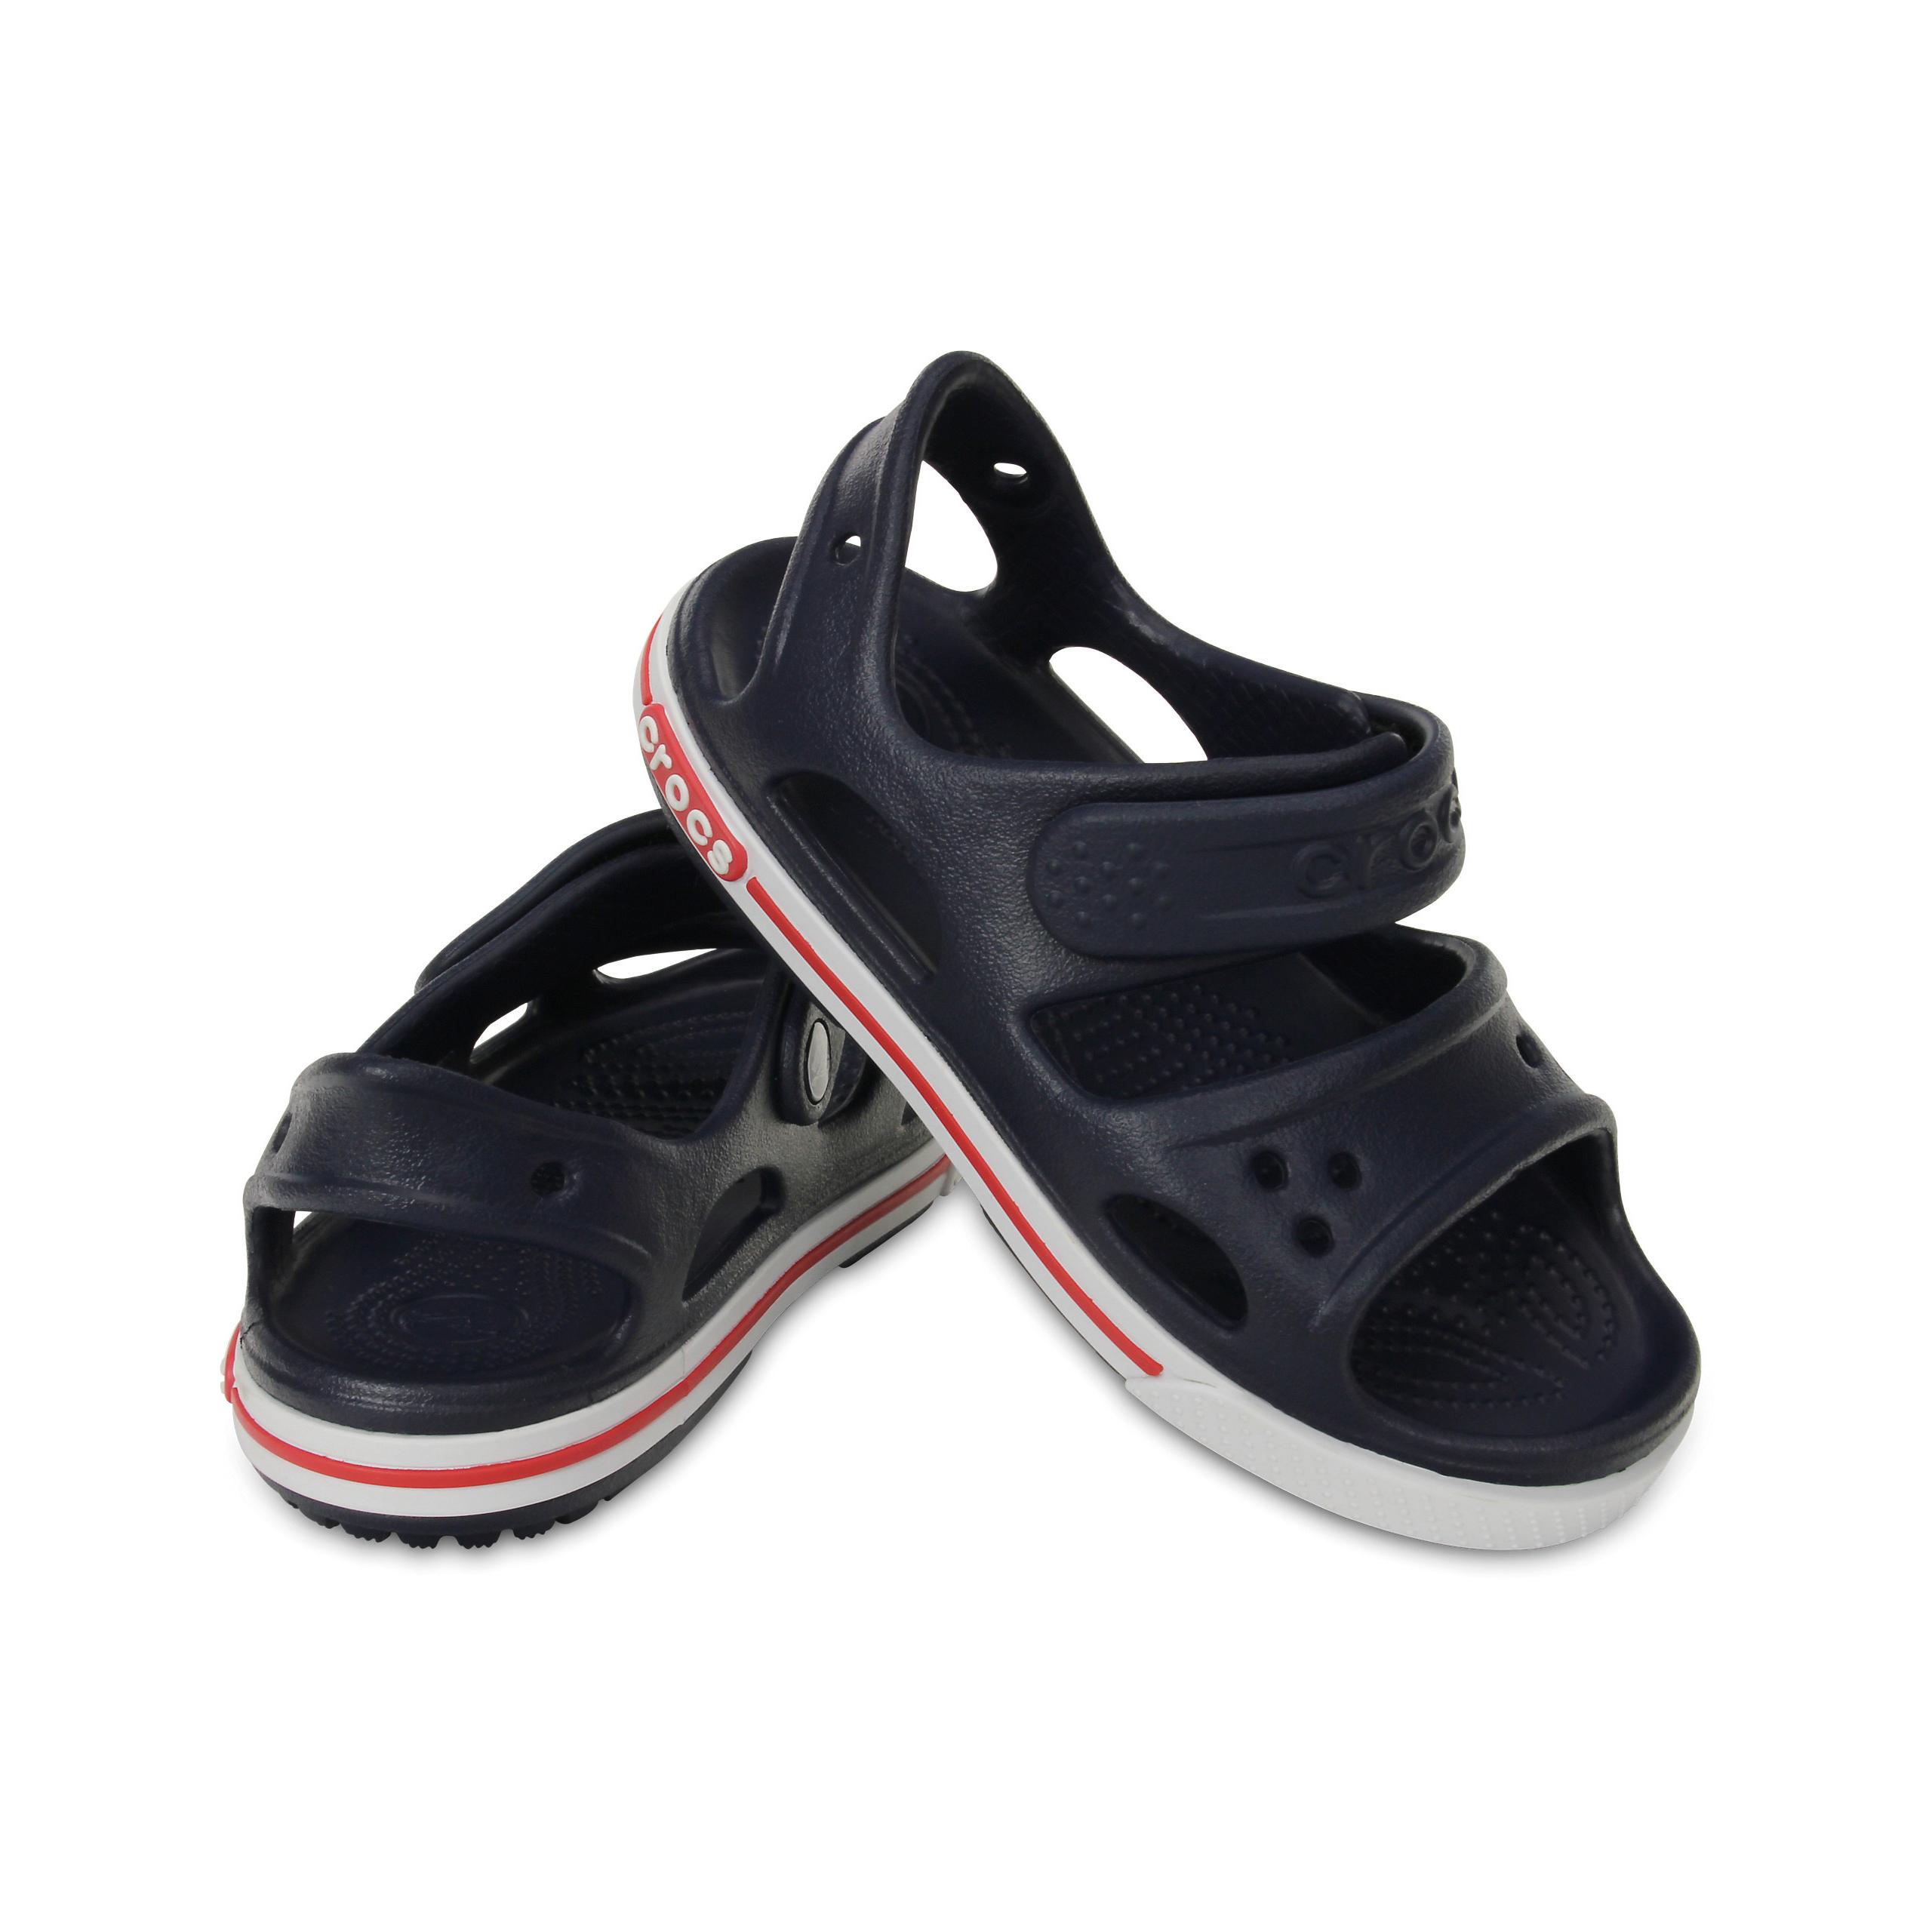 Crocs - Sandales Crocs™ Crocband II Kids - Navy / White - 24/25 EU (C8 US)